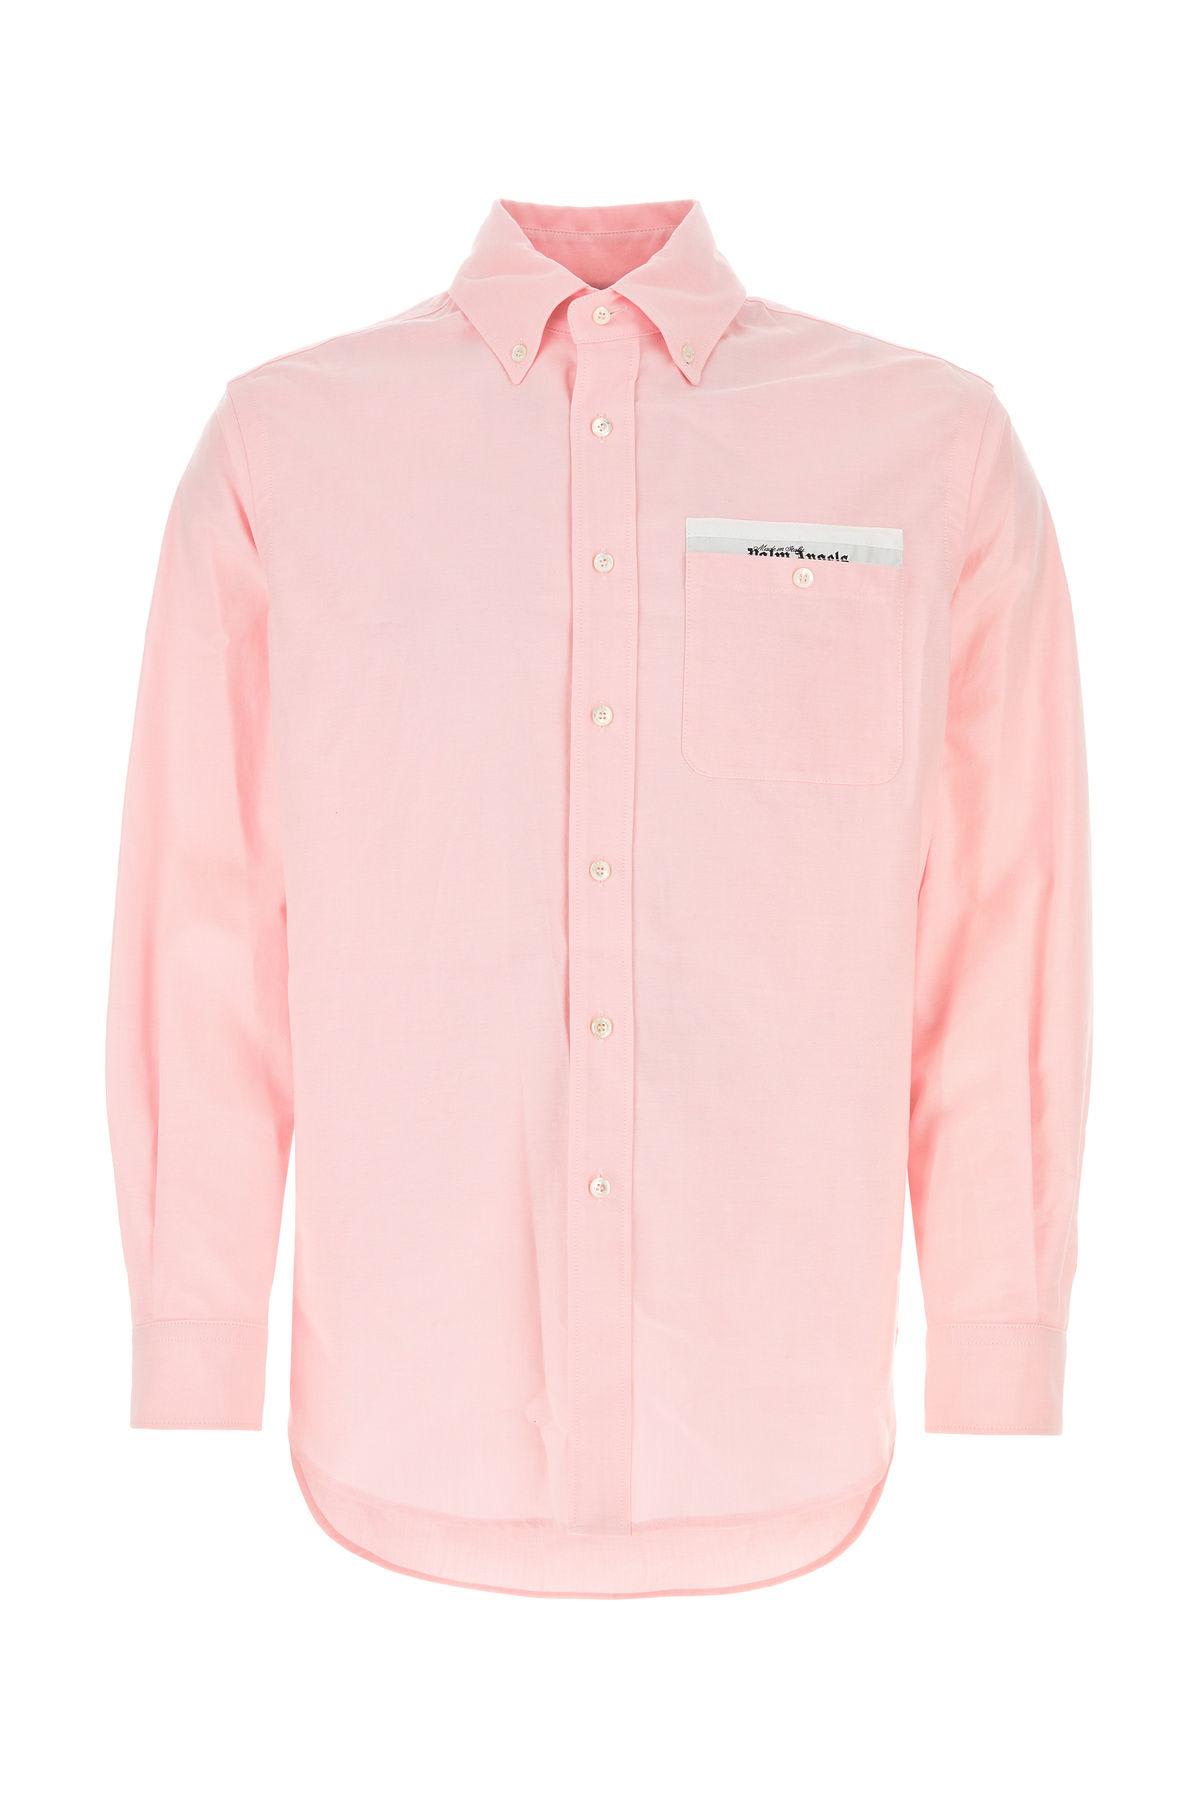 Shop Palm Angels Pink Cotton Shirt